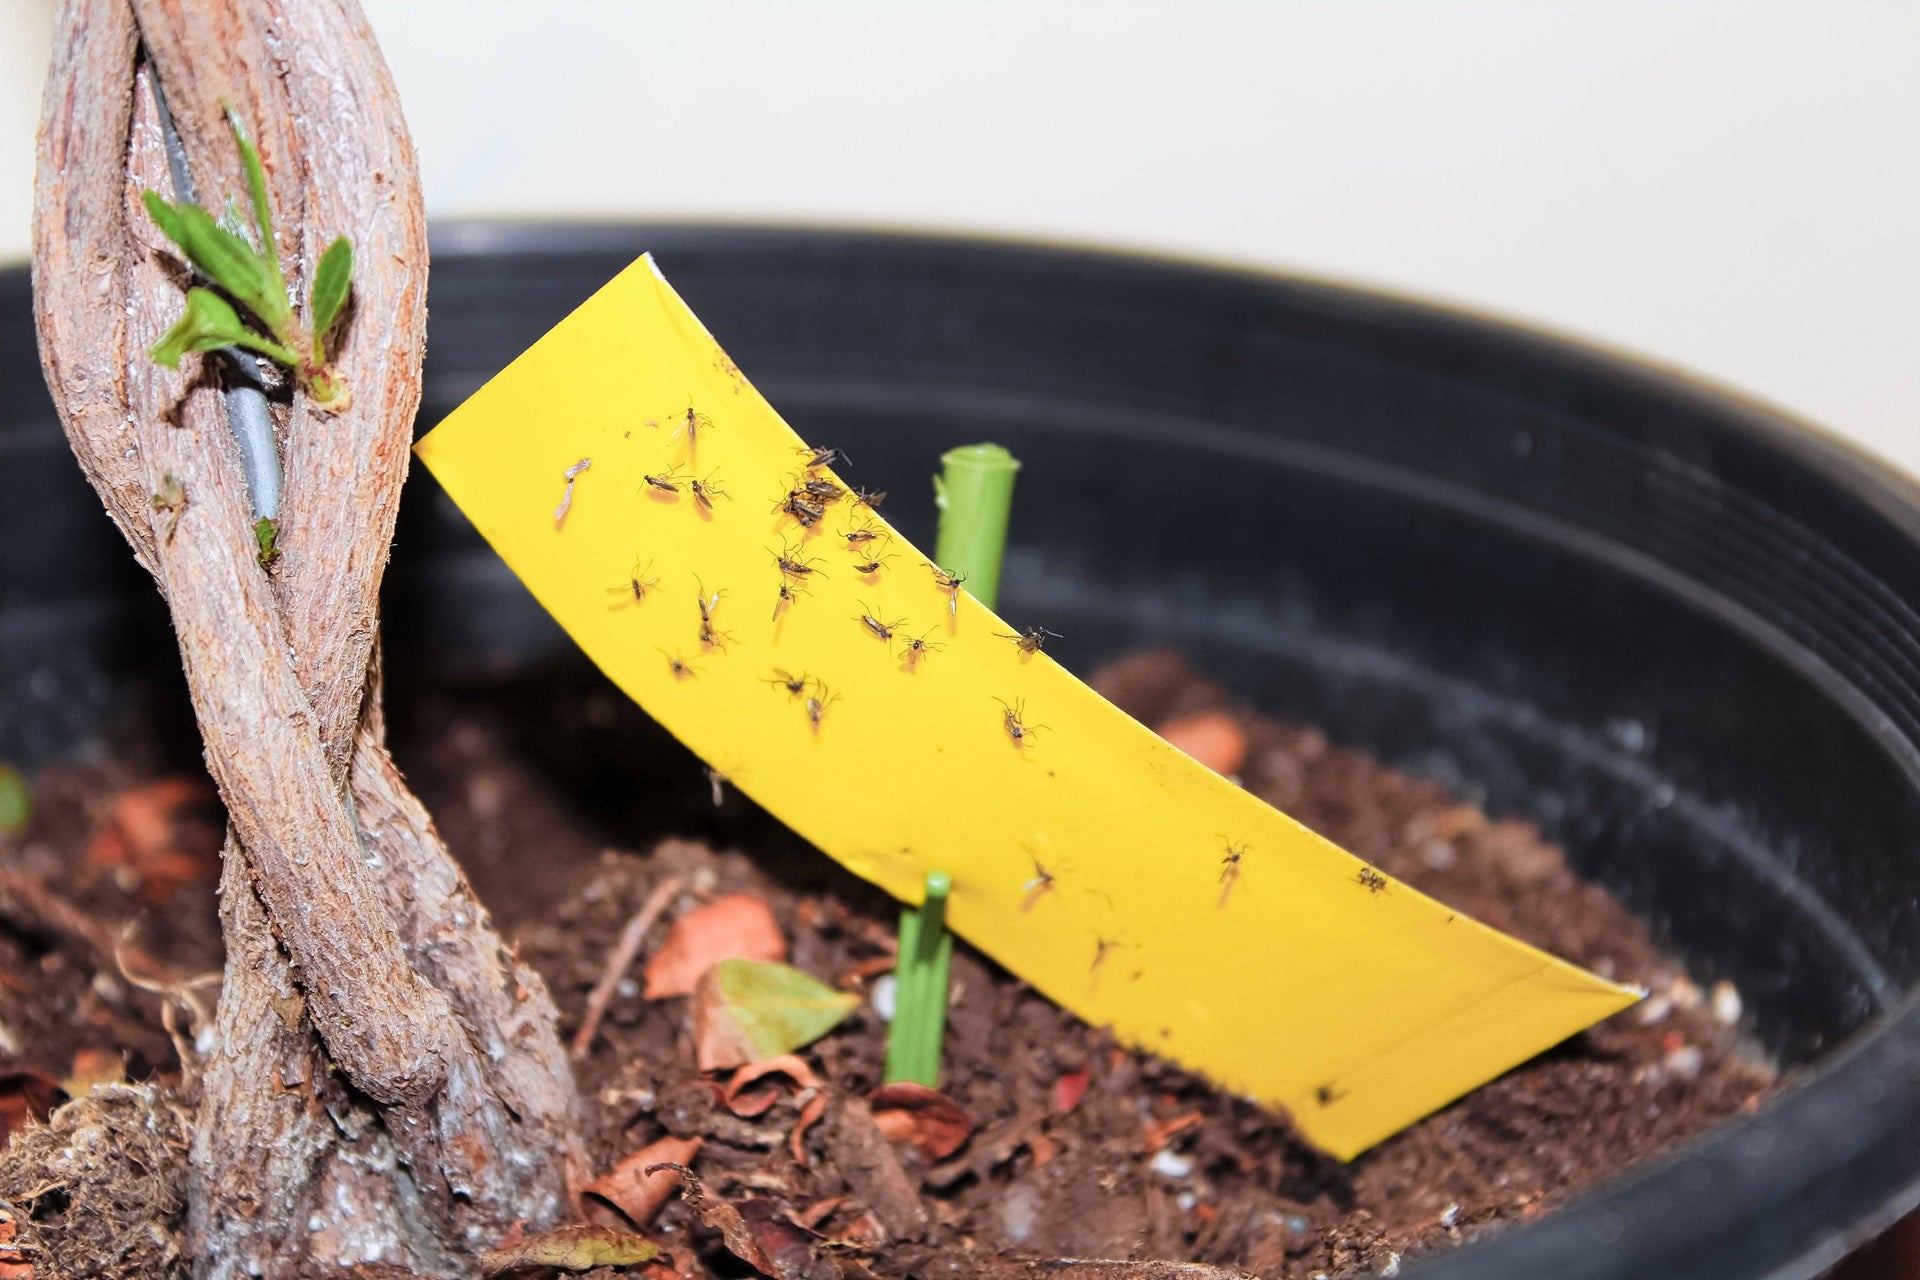 Gnat Management: Get Rid Of Fungus Gnats In Soil